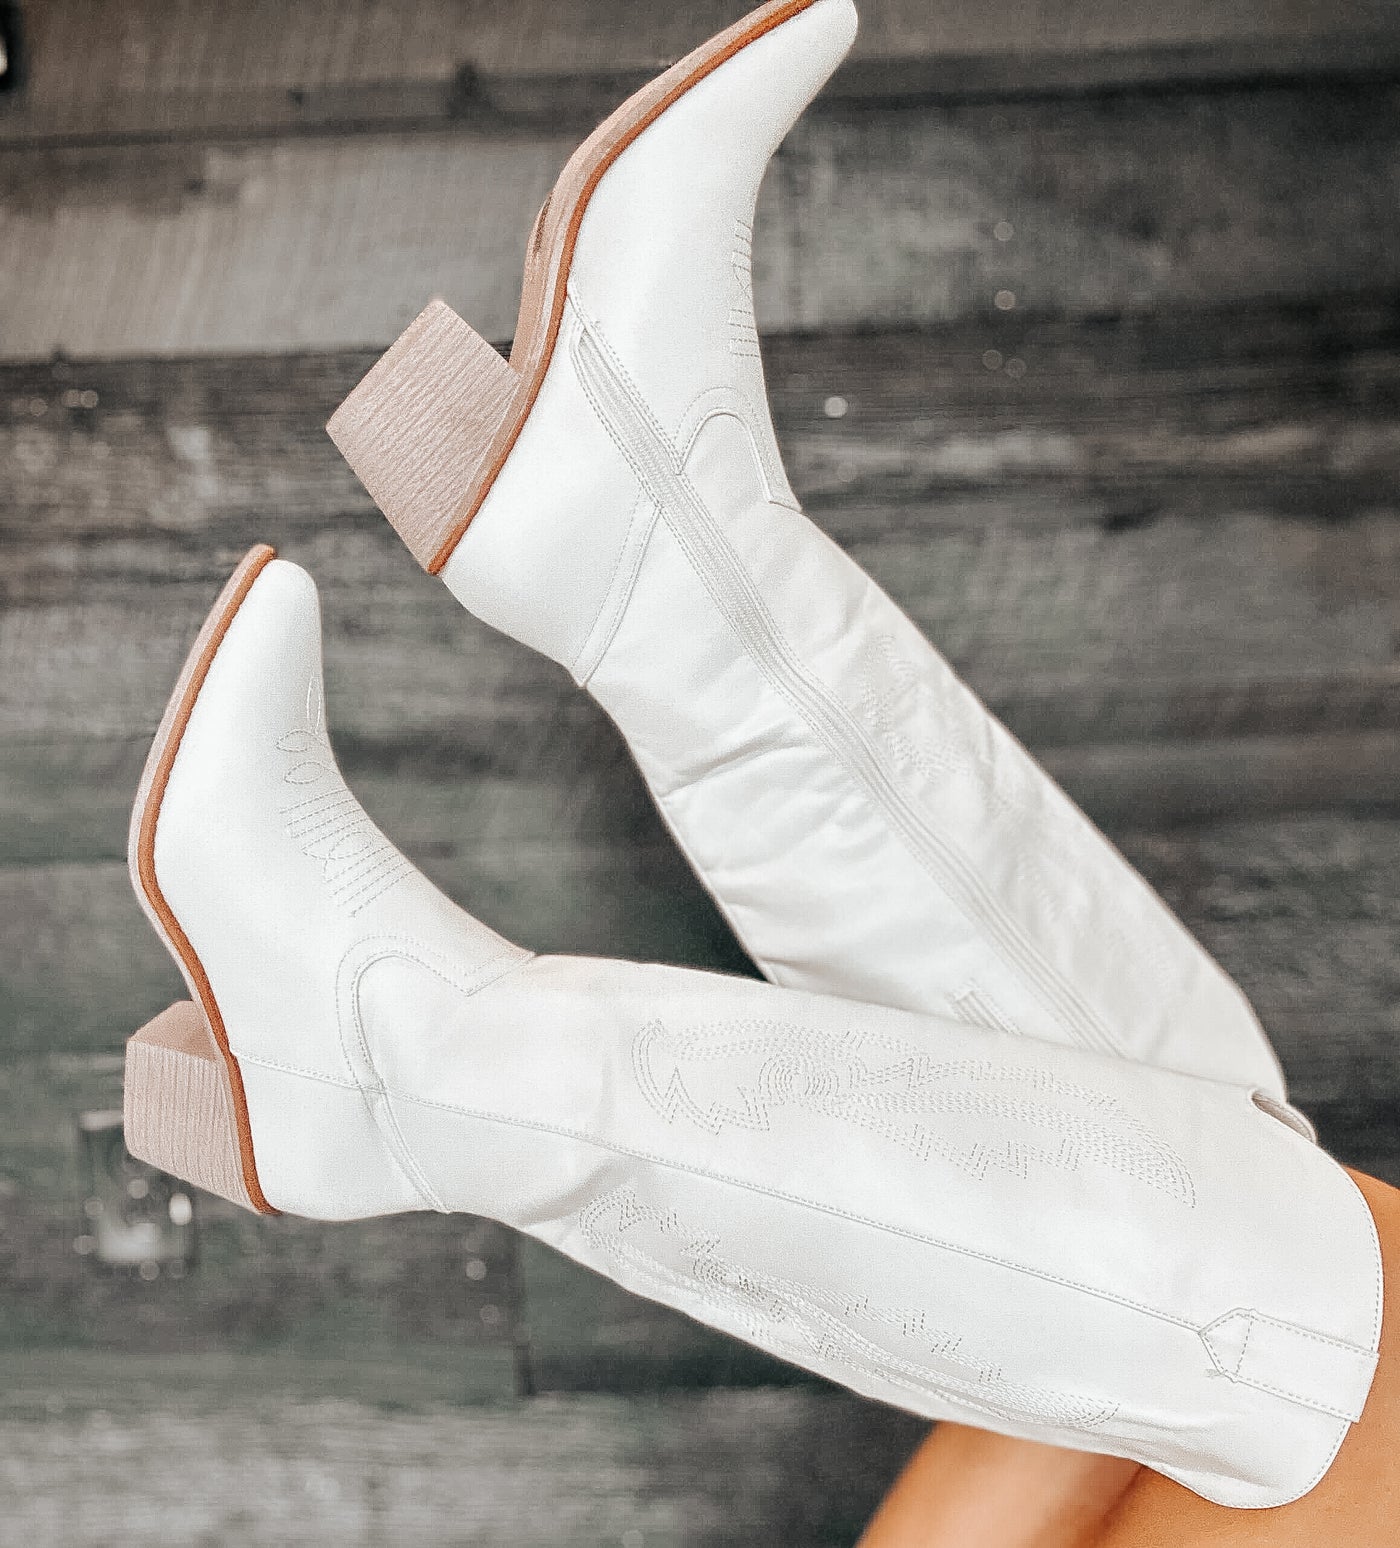 Nashville Night Out White Cowgirl Boots-180 - SHOES-OLEM-[option4]-[option5]-[option6]-Leather & Lace Boutique Shop